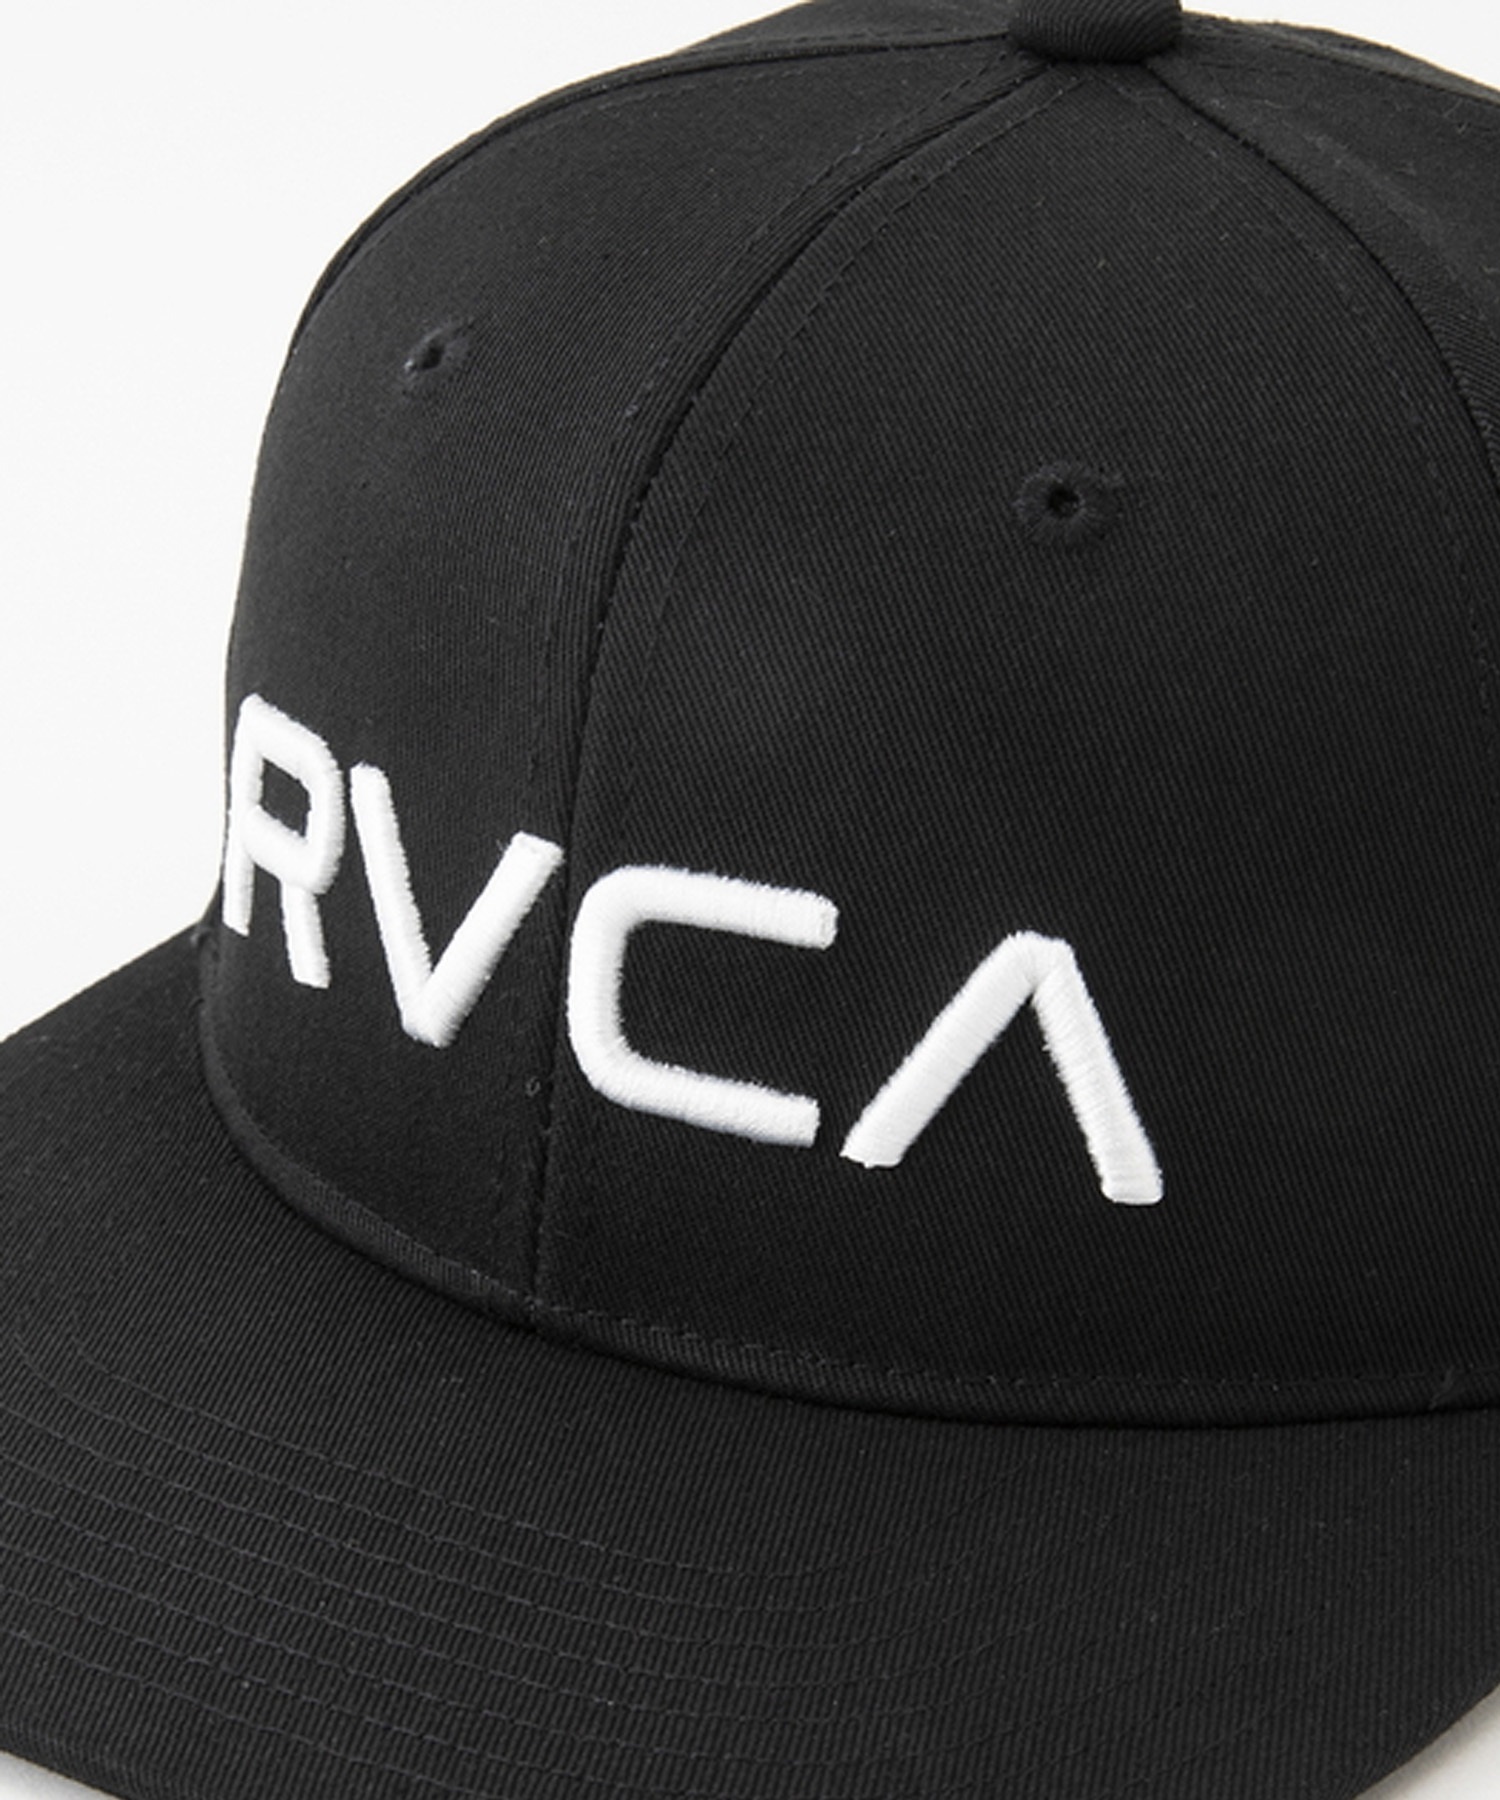 RVCA/ルーカ WILL SNAPBACKII キャップ 帽子 フリーサイズ BE041-911(BLK-FREE)